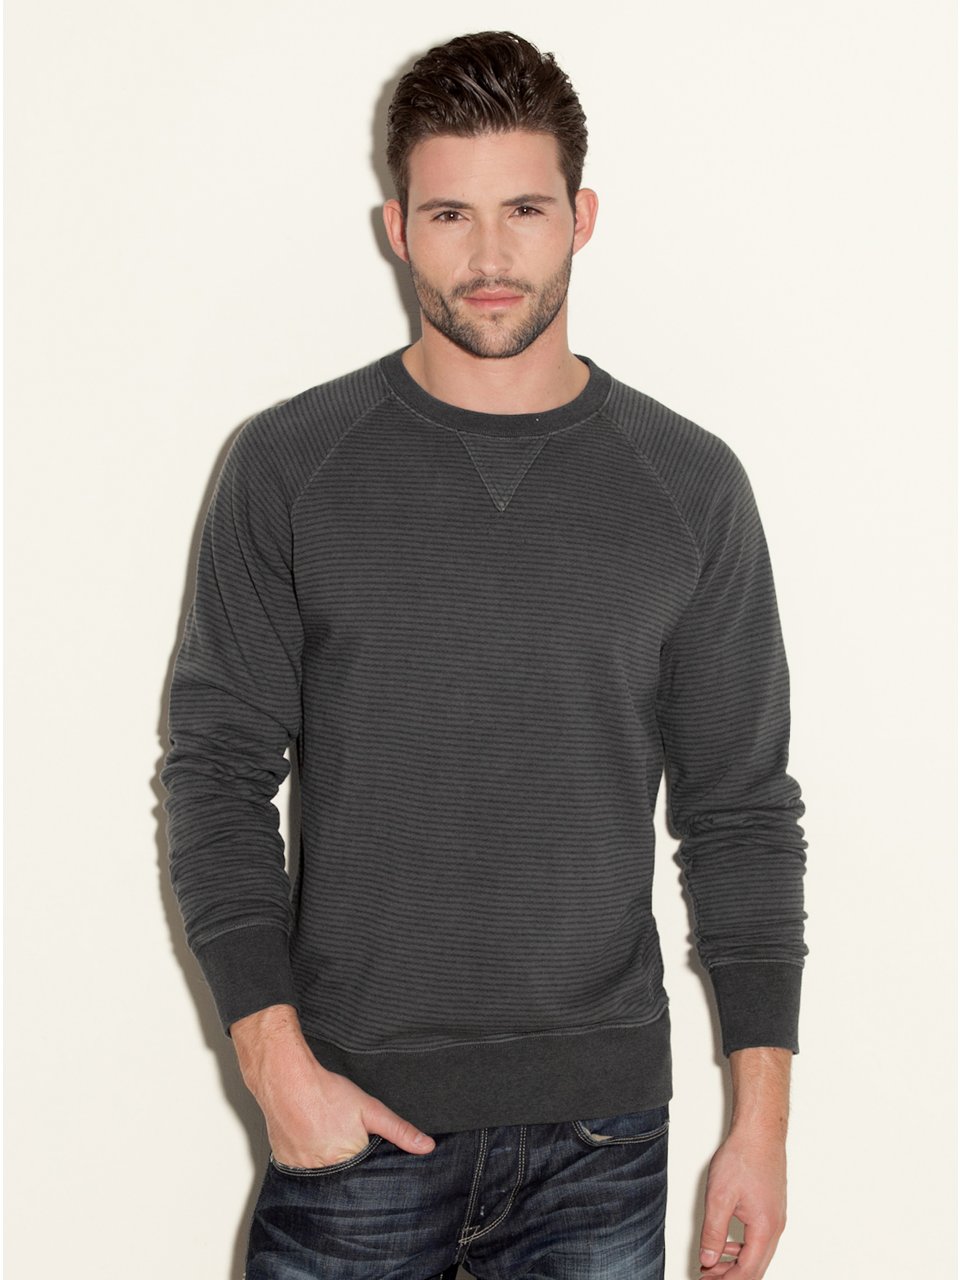 New 2015 Sweater Men Pullover Men brand Turtleneck Winter